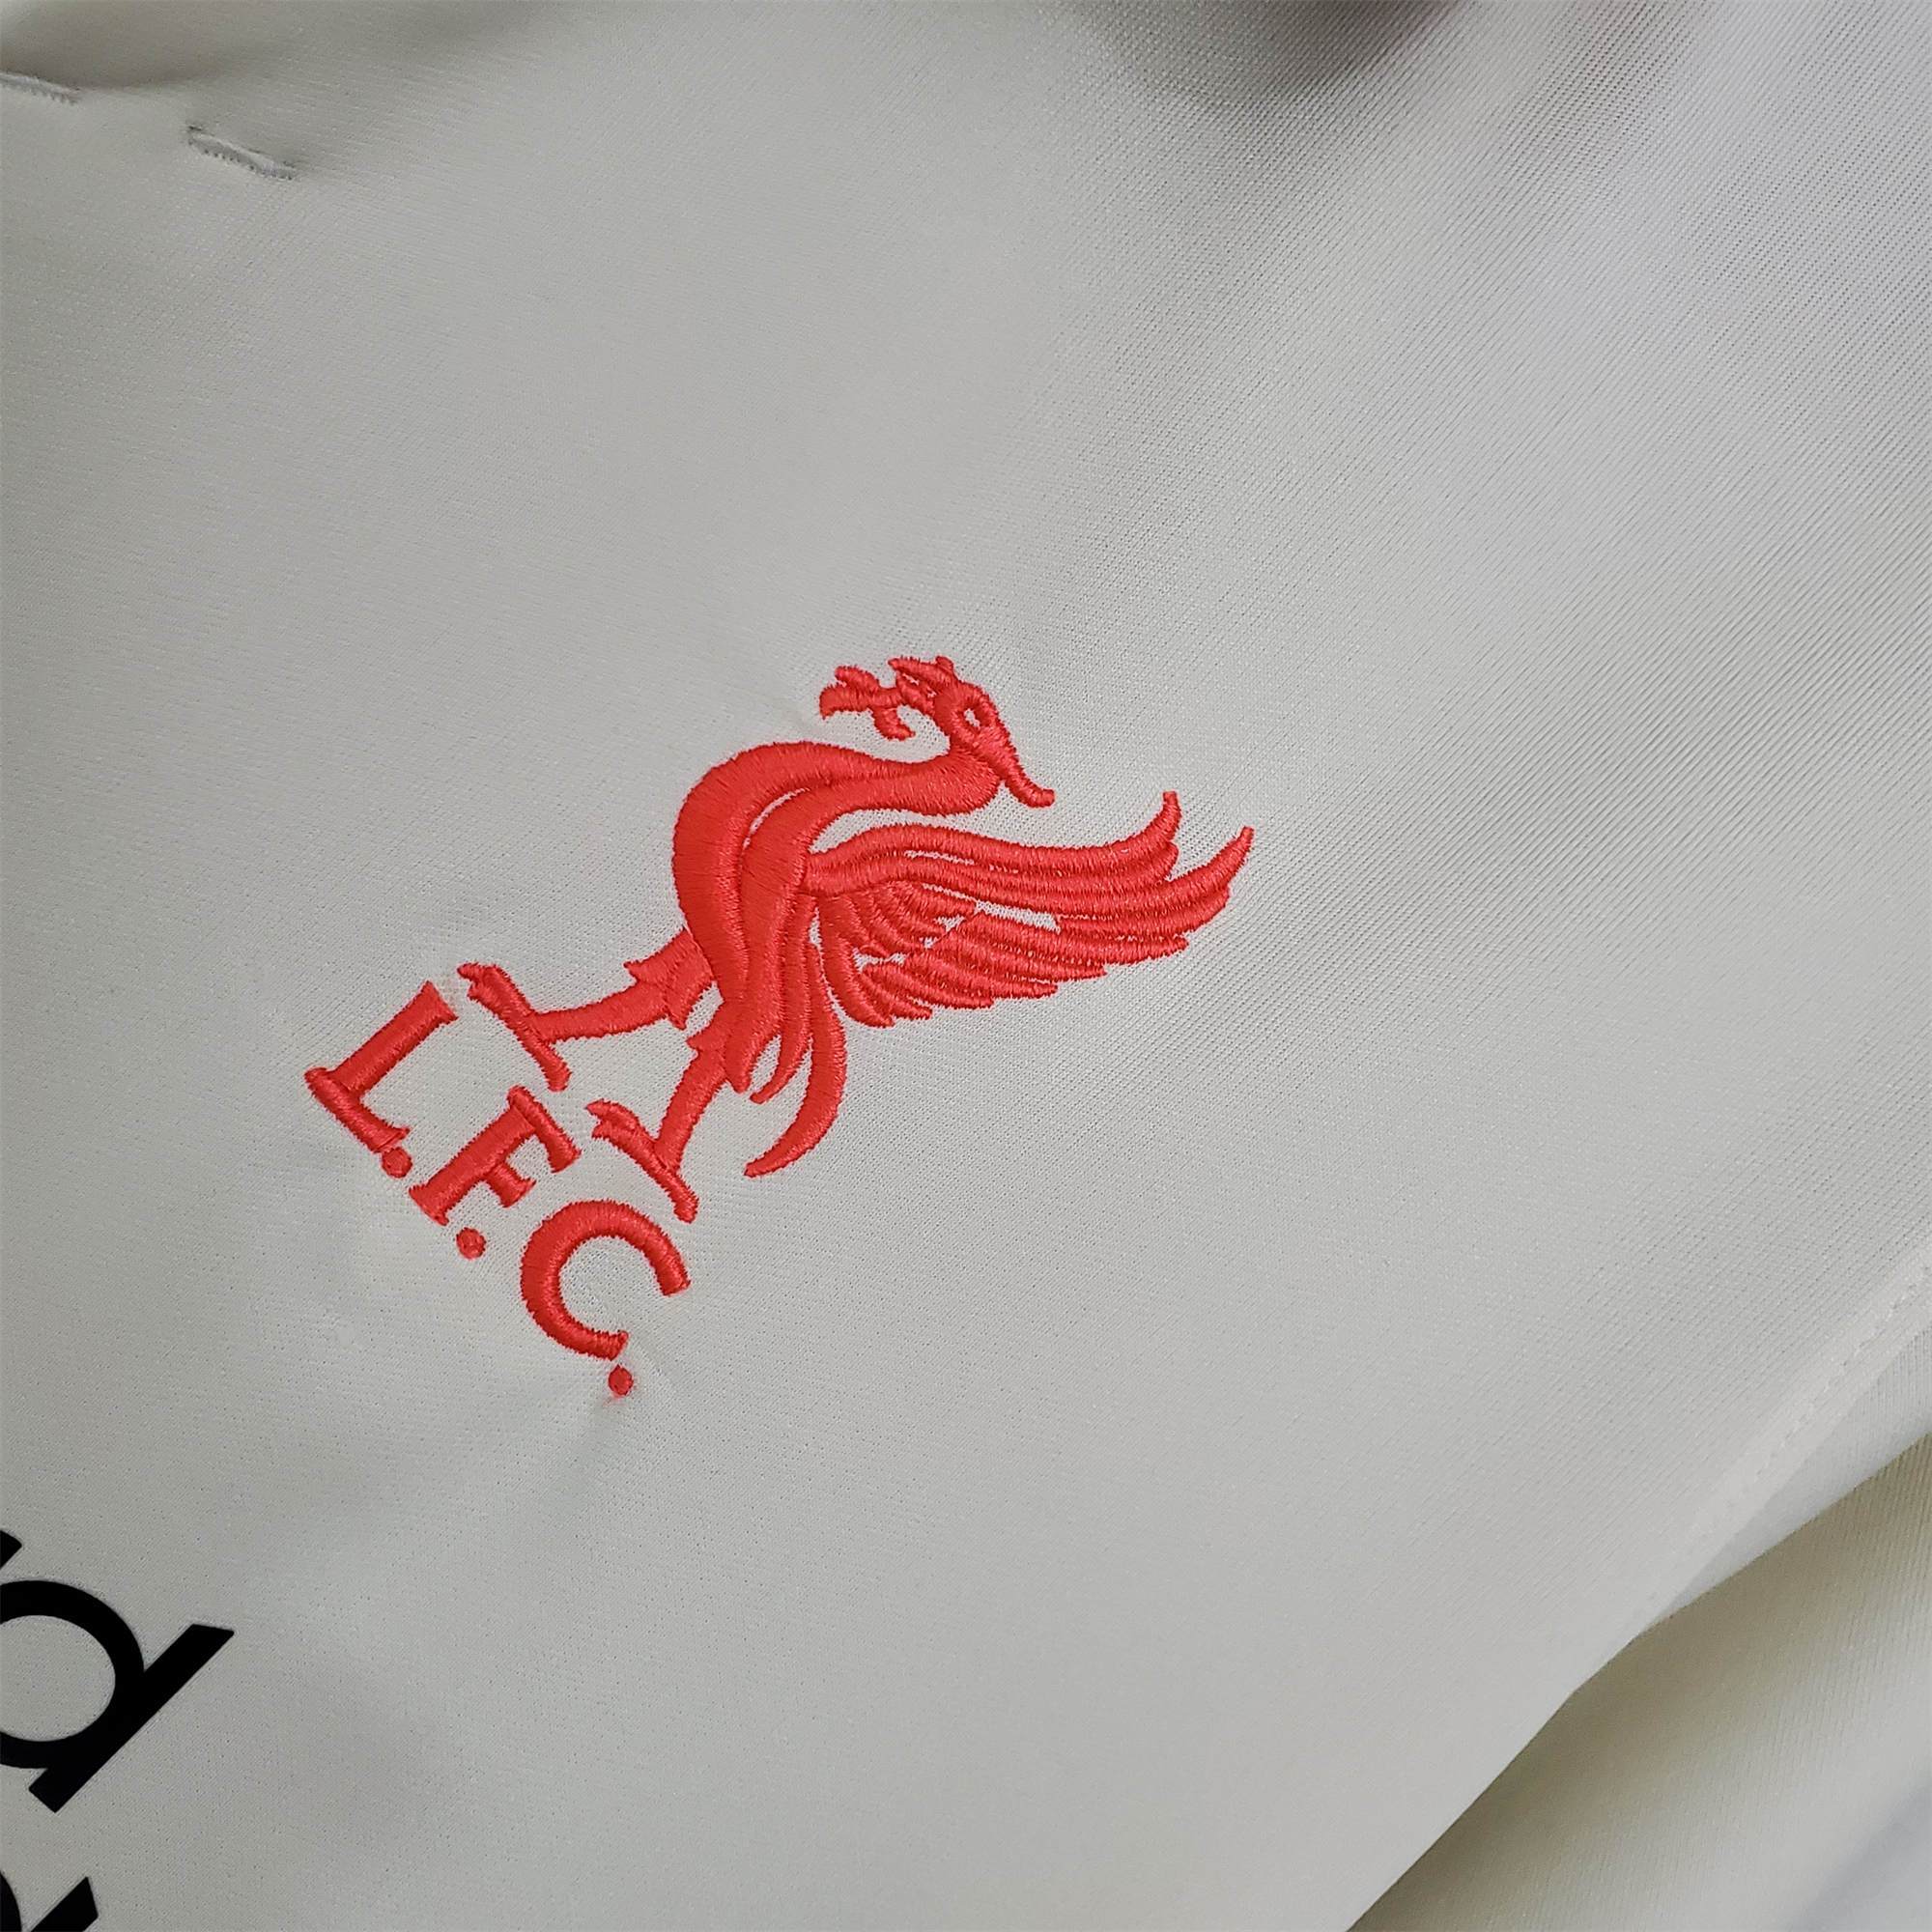 Liverpool 21-22 | Away - FandomKits Fandom Kits